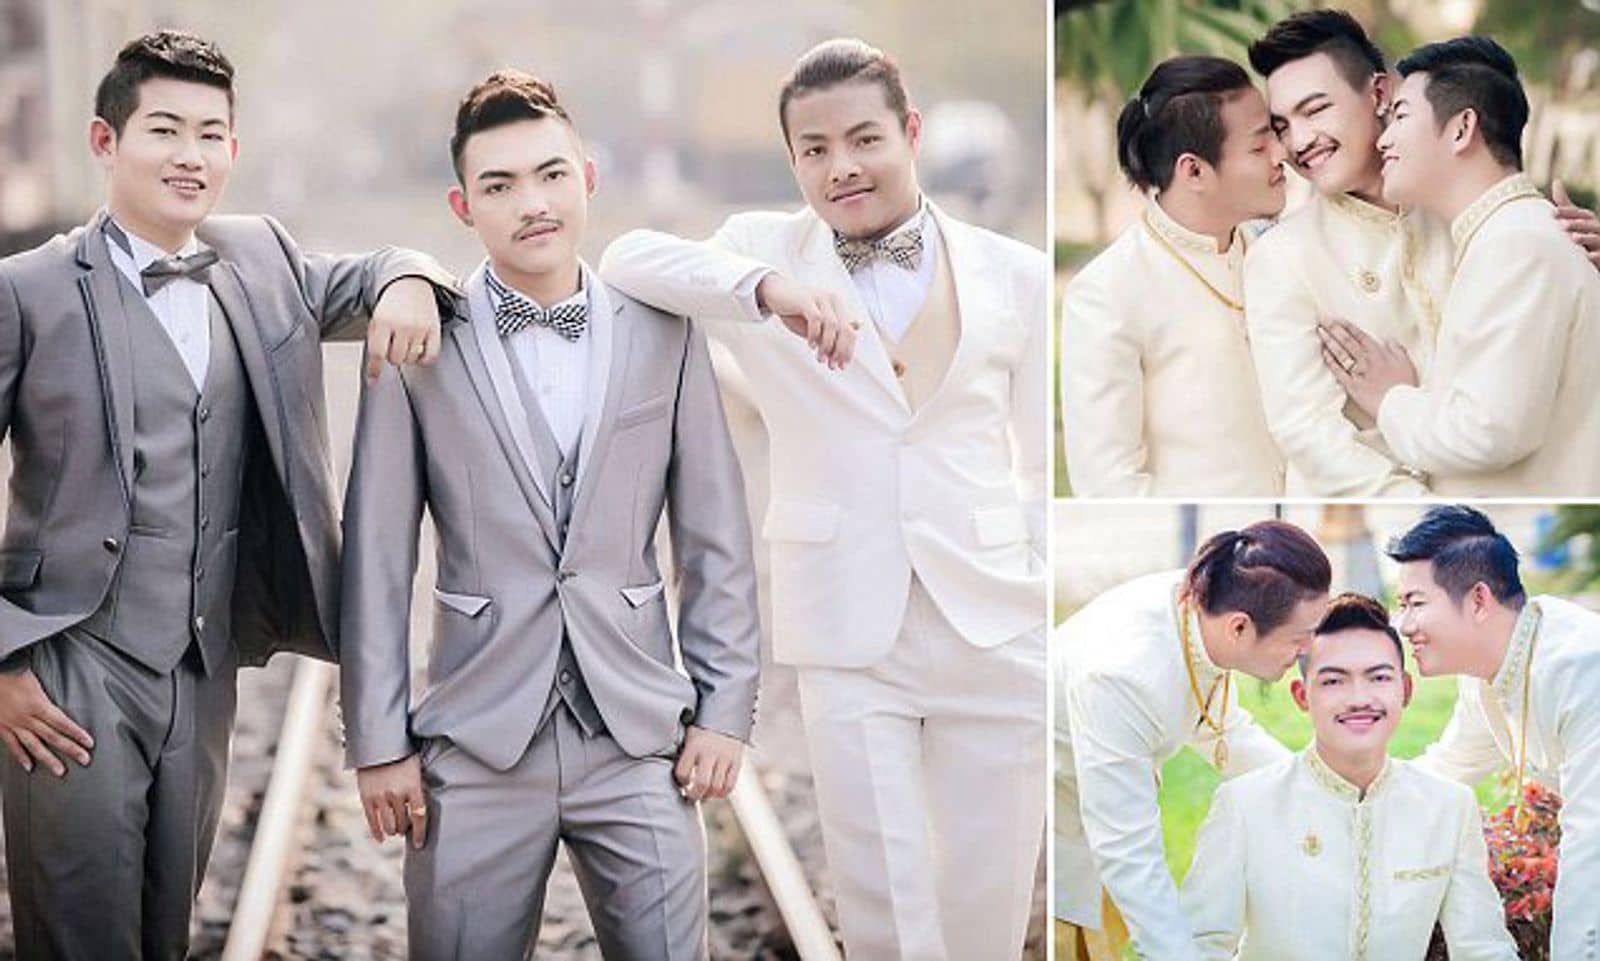 Thai gay thruple threesome wedding